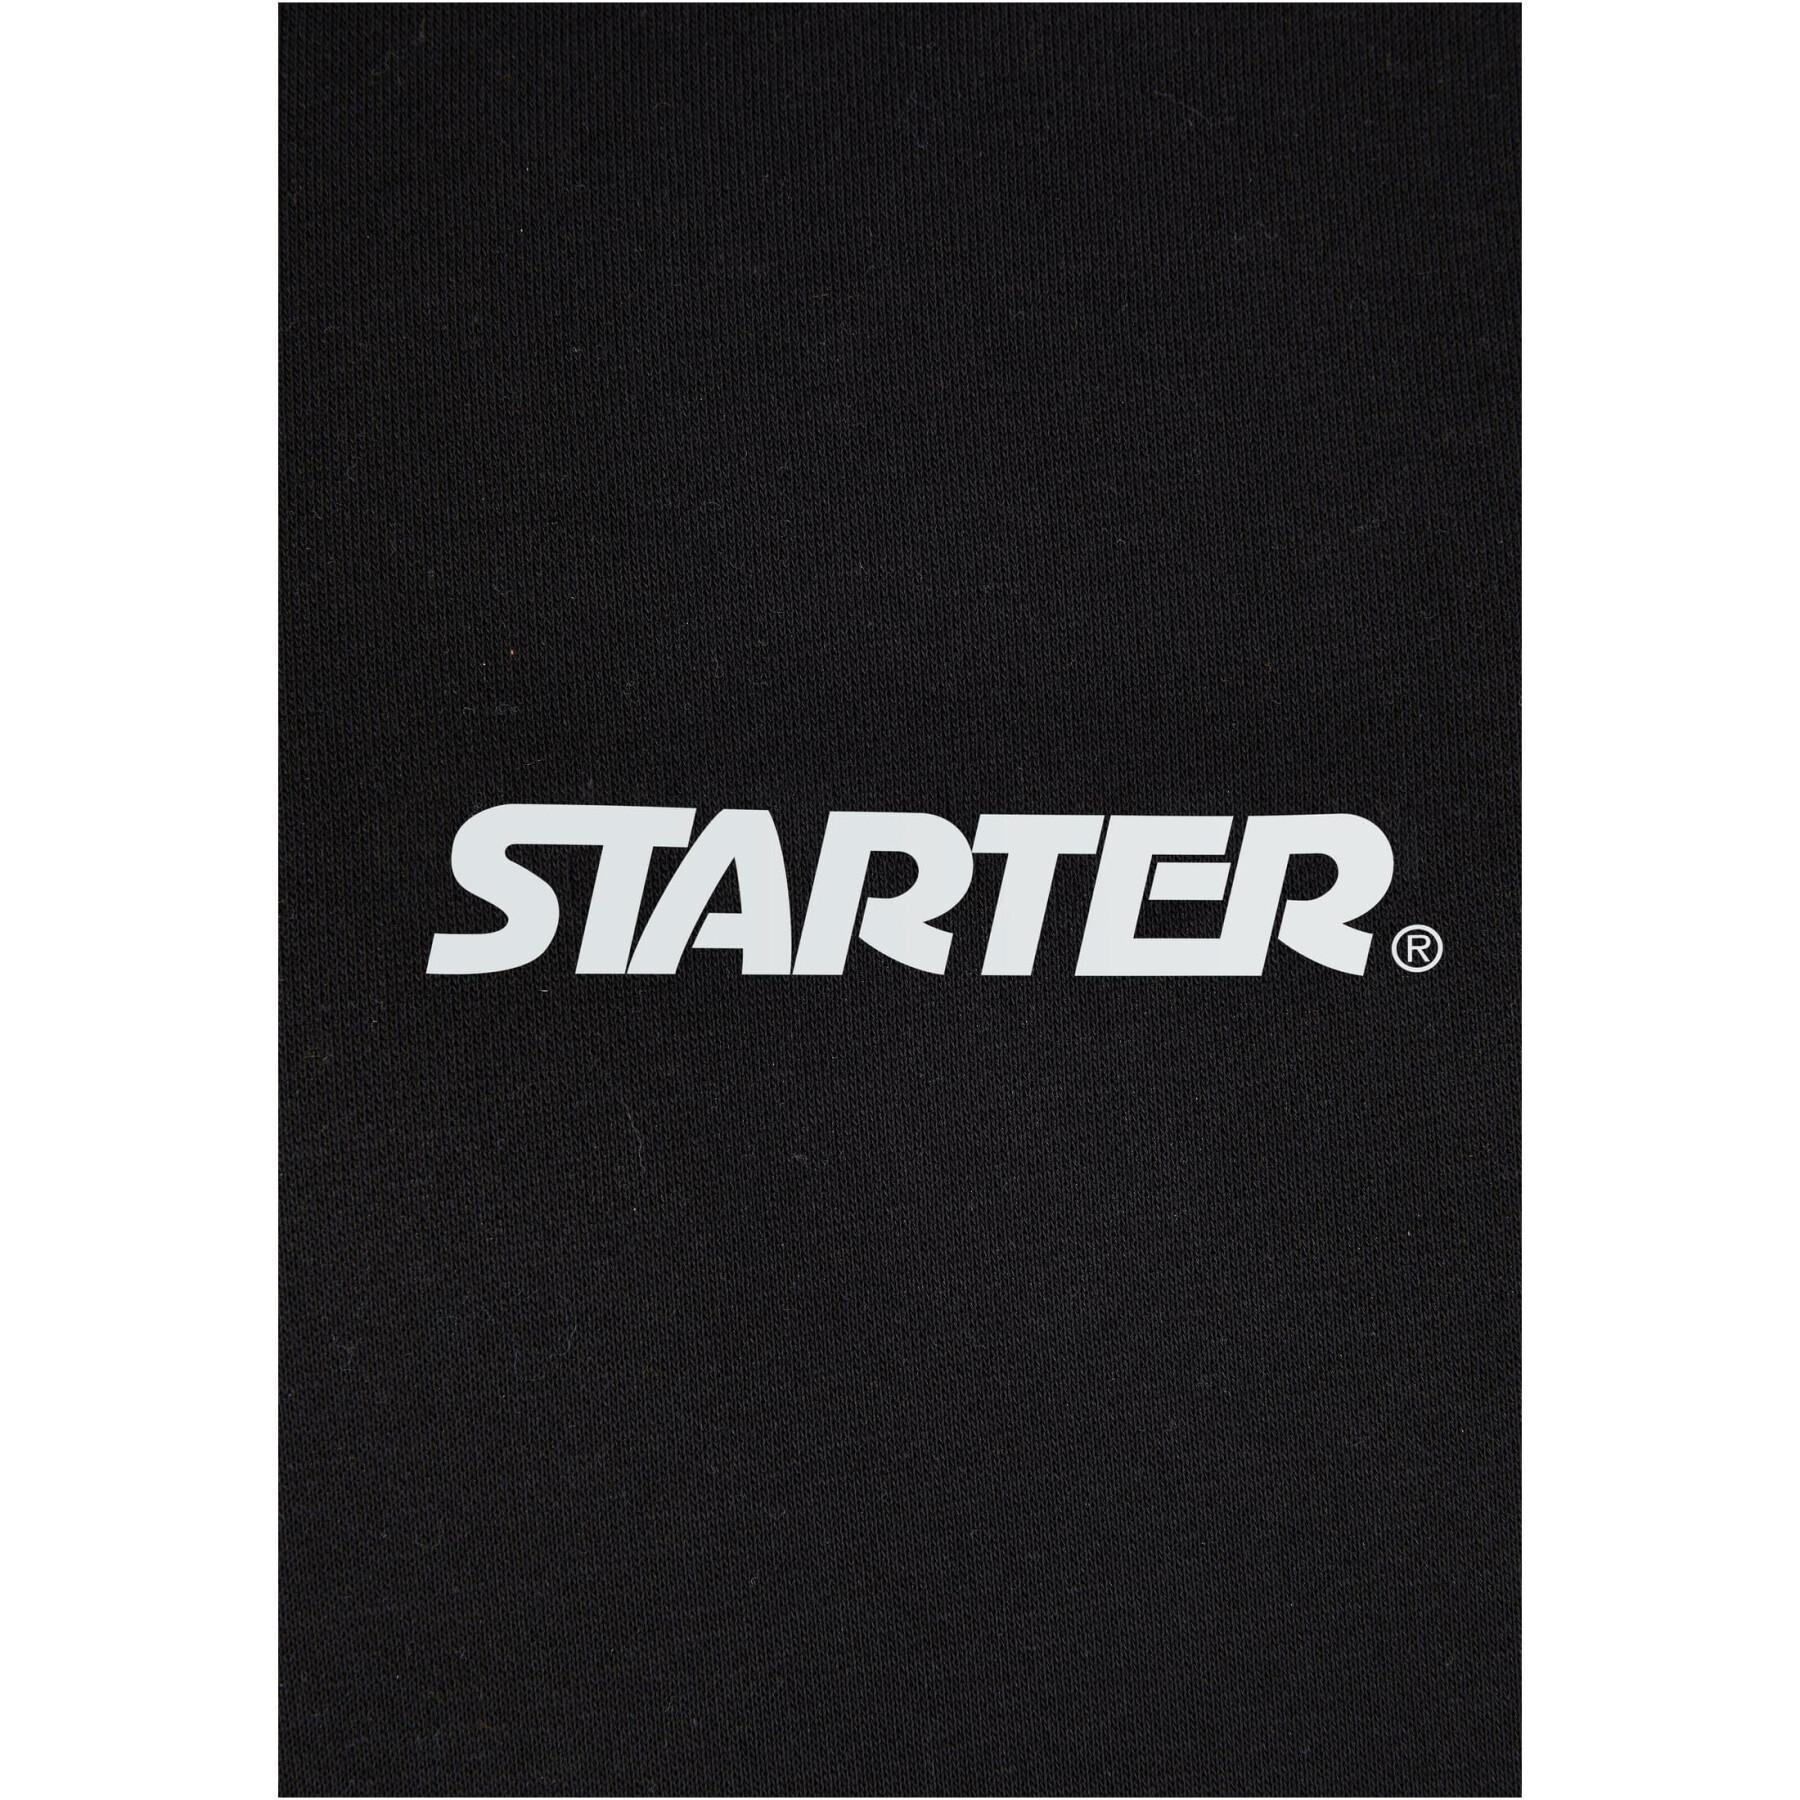 Camisola com capuz Starter Starter Star